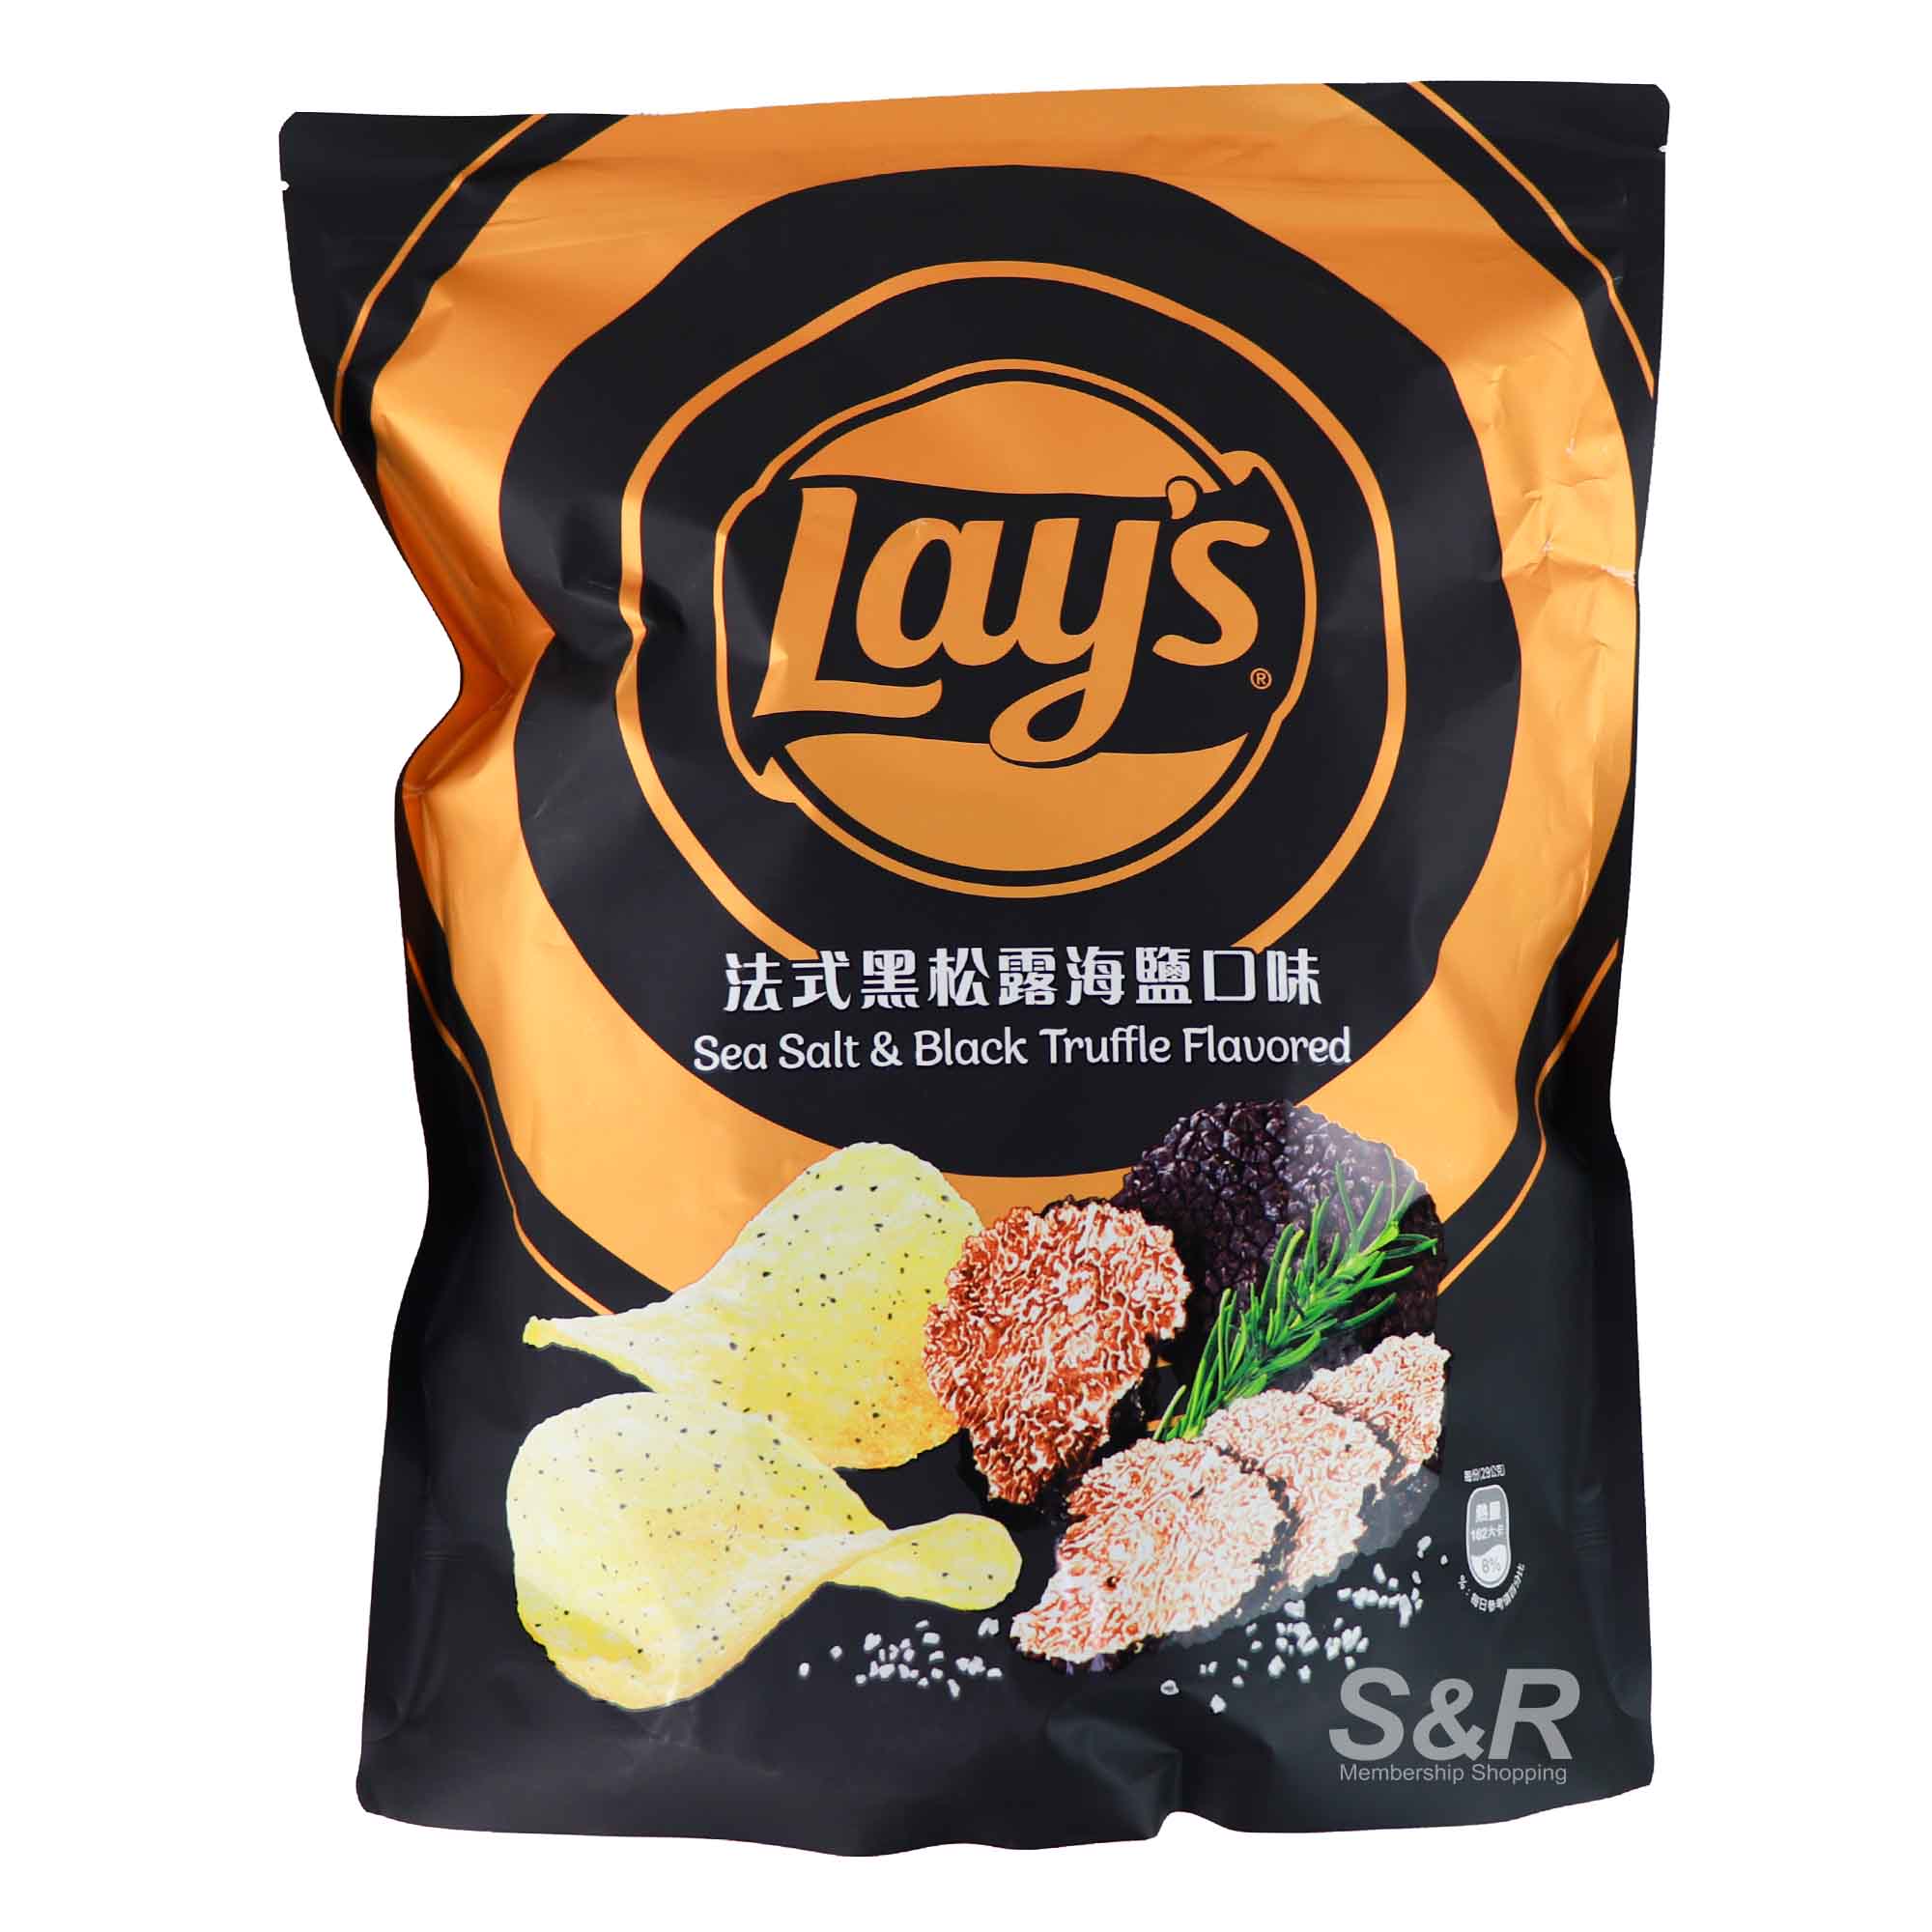 Lay's Sea Salt & Black Truffle Flavored Chips 580g